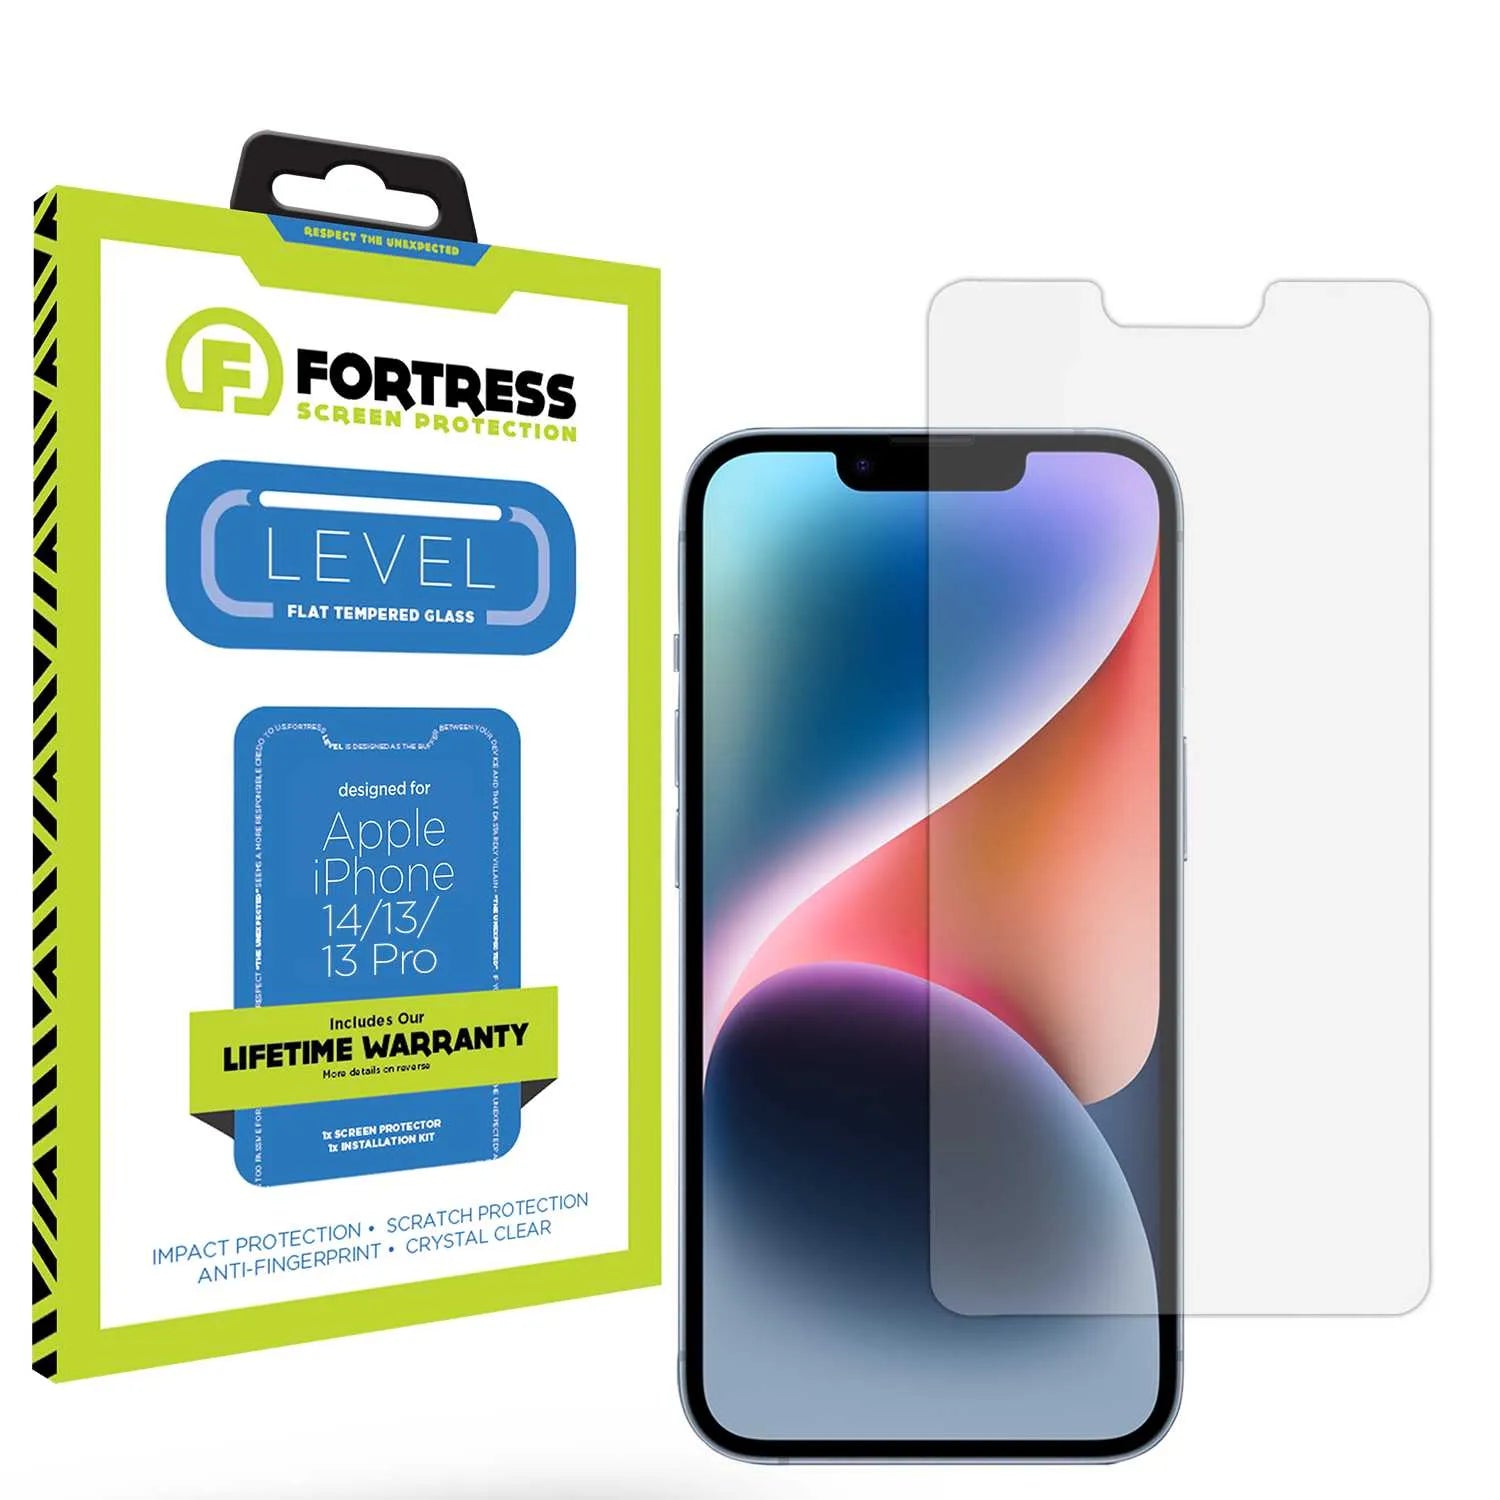 Fortress Fortress Warranty Replacement Program AppleiPhone13ScreenProtector Warranty 8.99